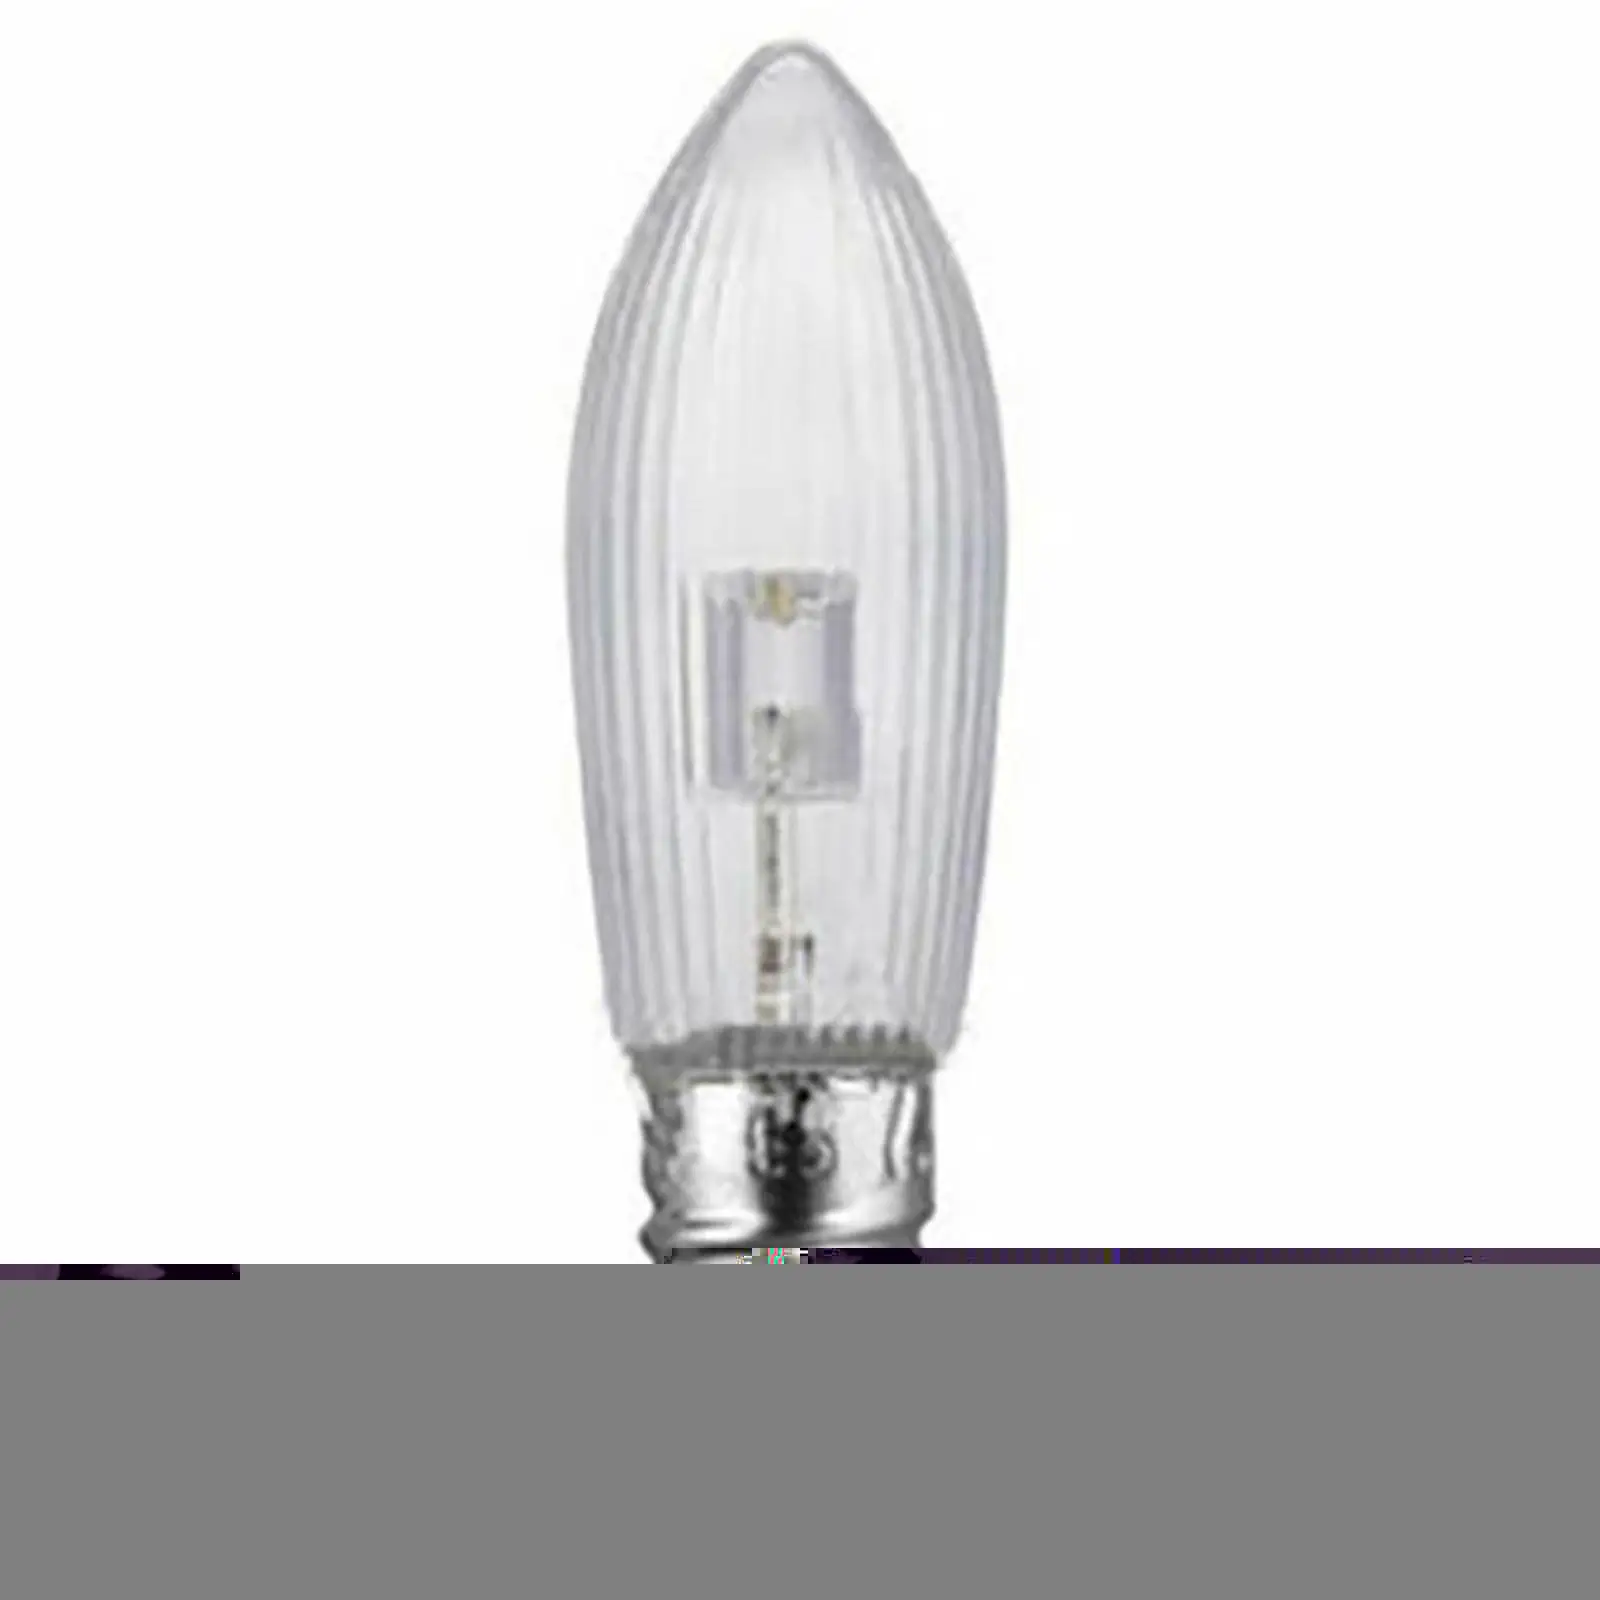 1Pcs E10 LED Bulbs Light Replacement Lamp Bulbs For Light Chains 10V-55V AC Bathroom Kitchen Home Lamps Bulb Decoration Lig B9U5